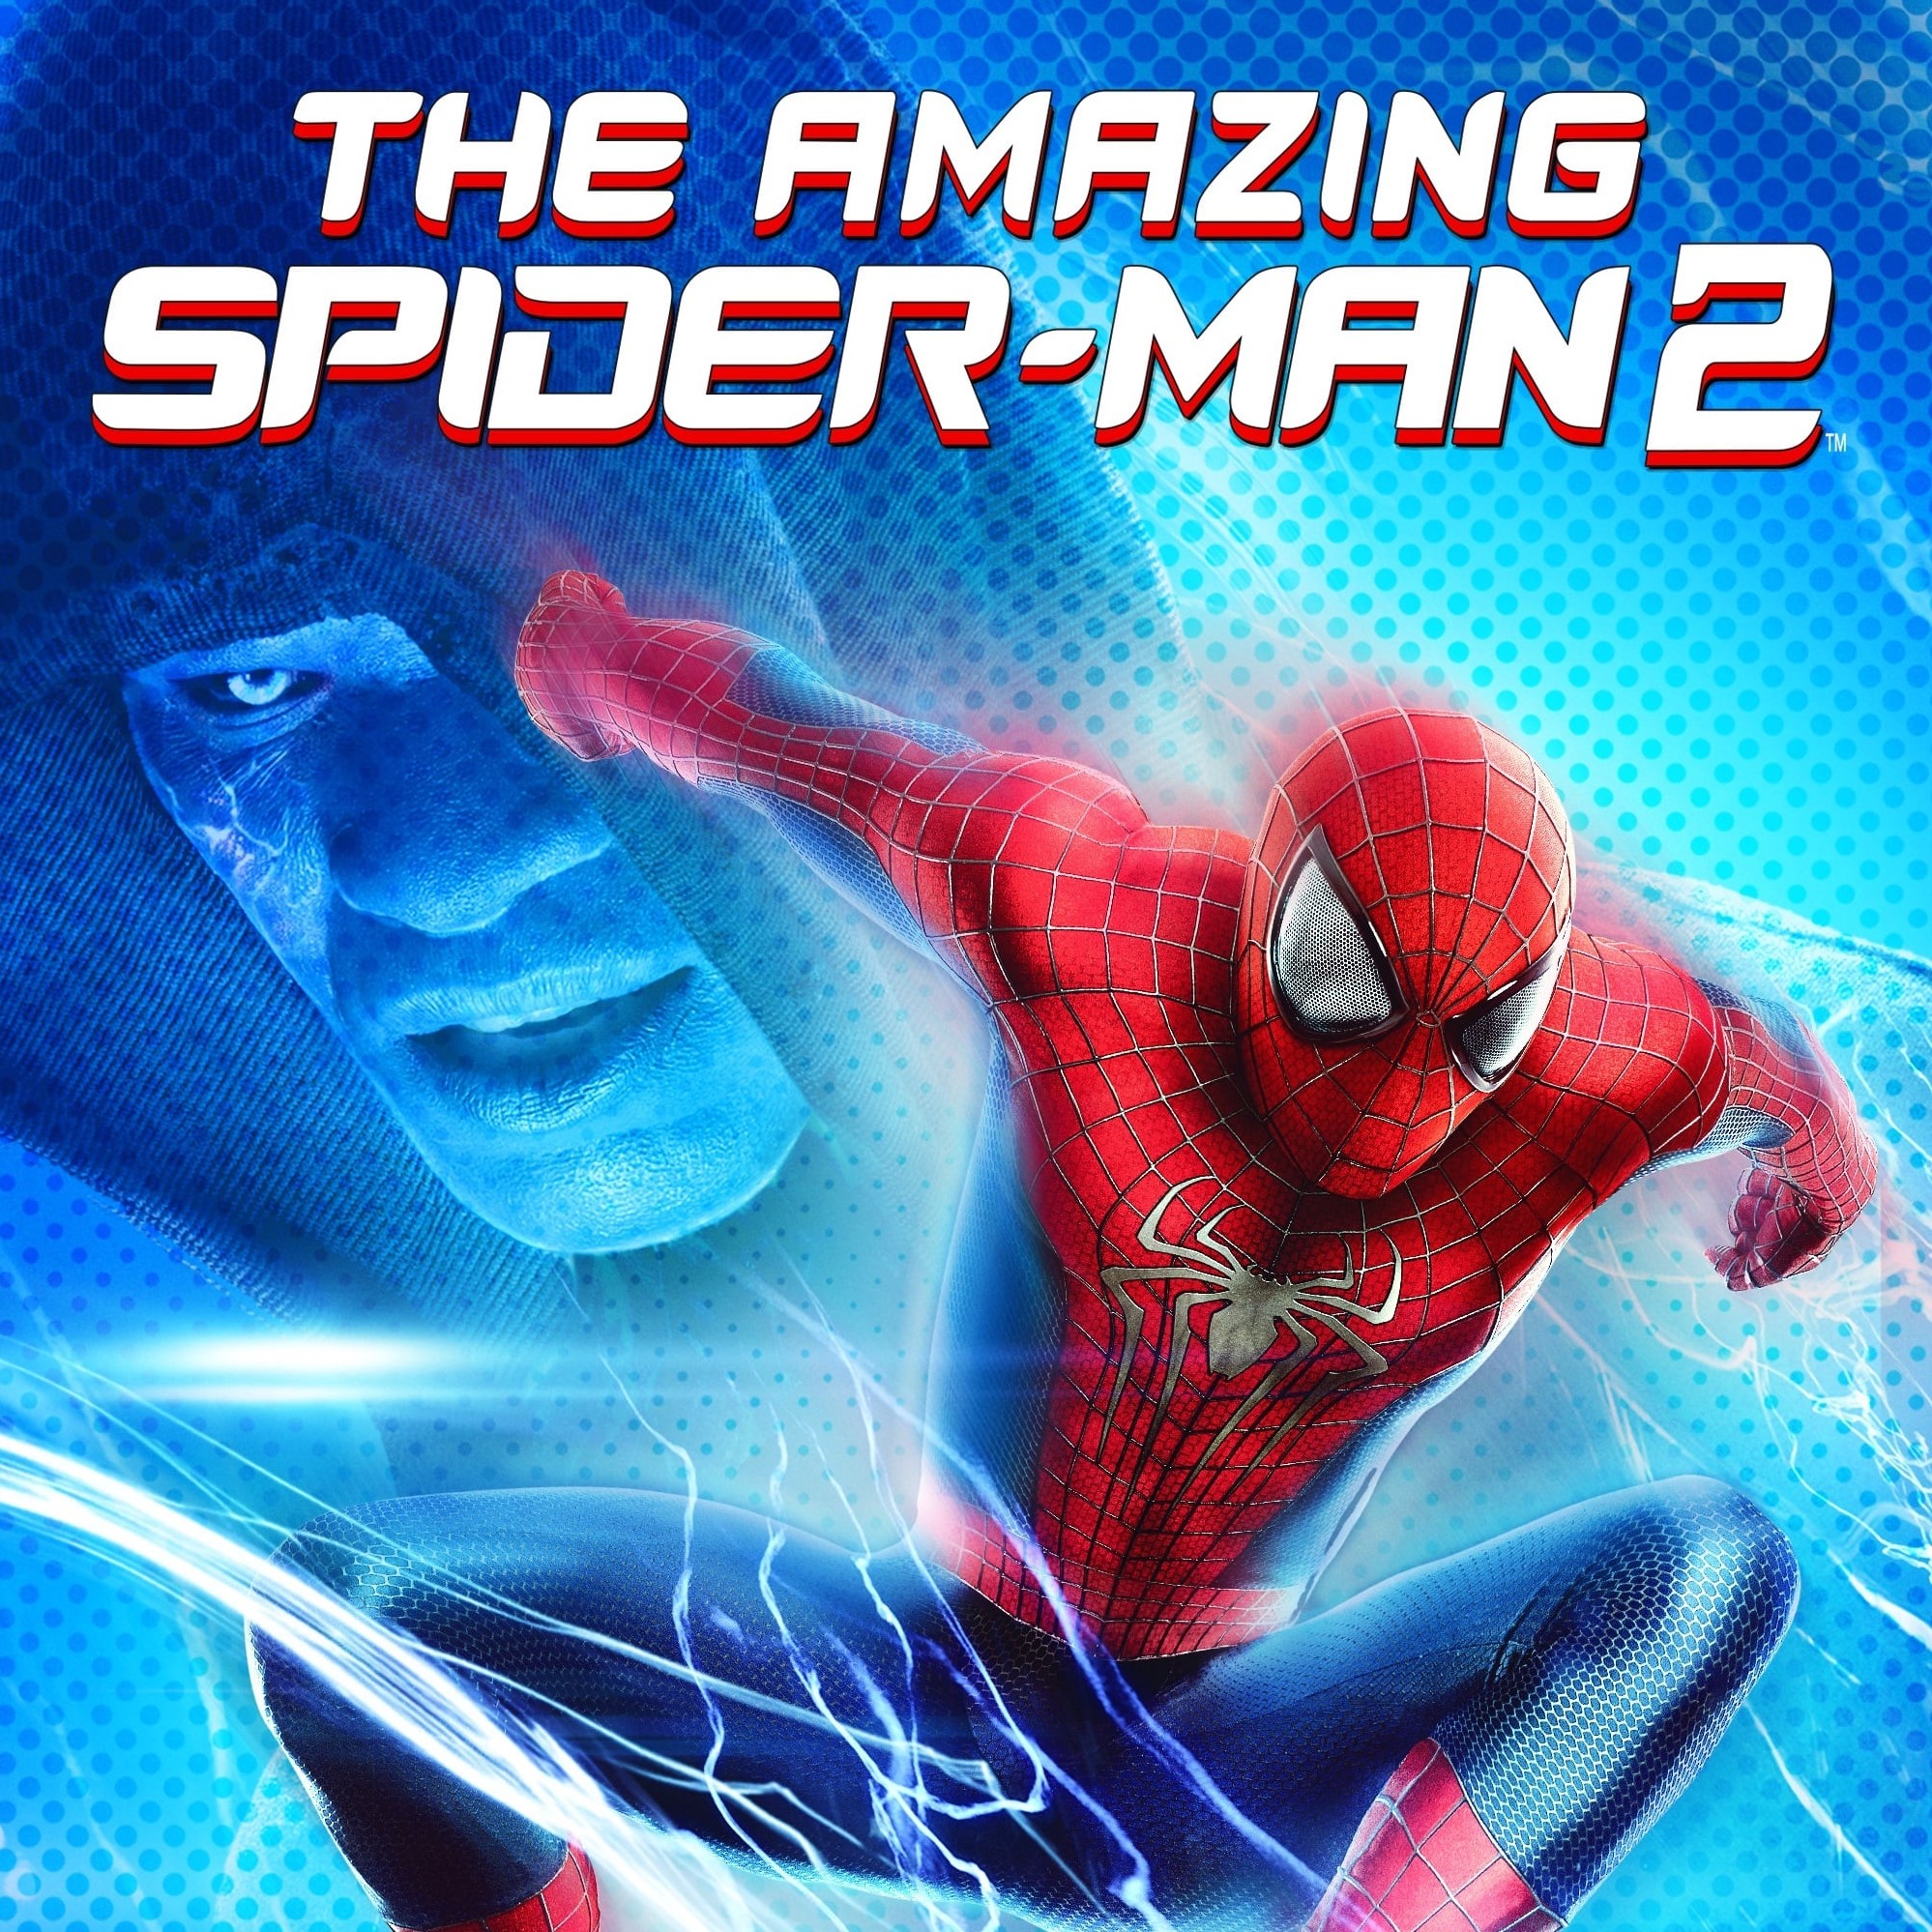 The Amazing Spider-Man 2 feature film